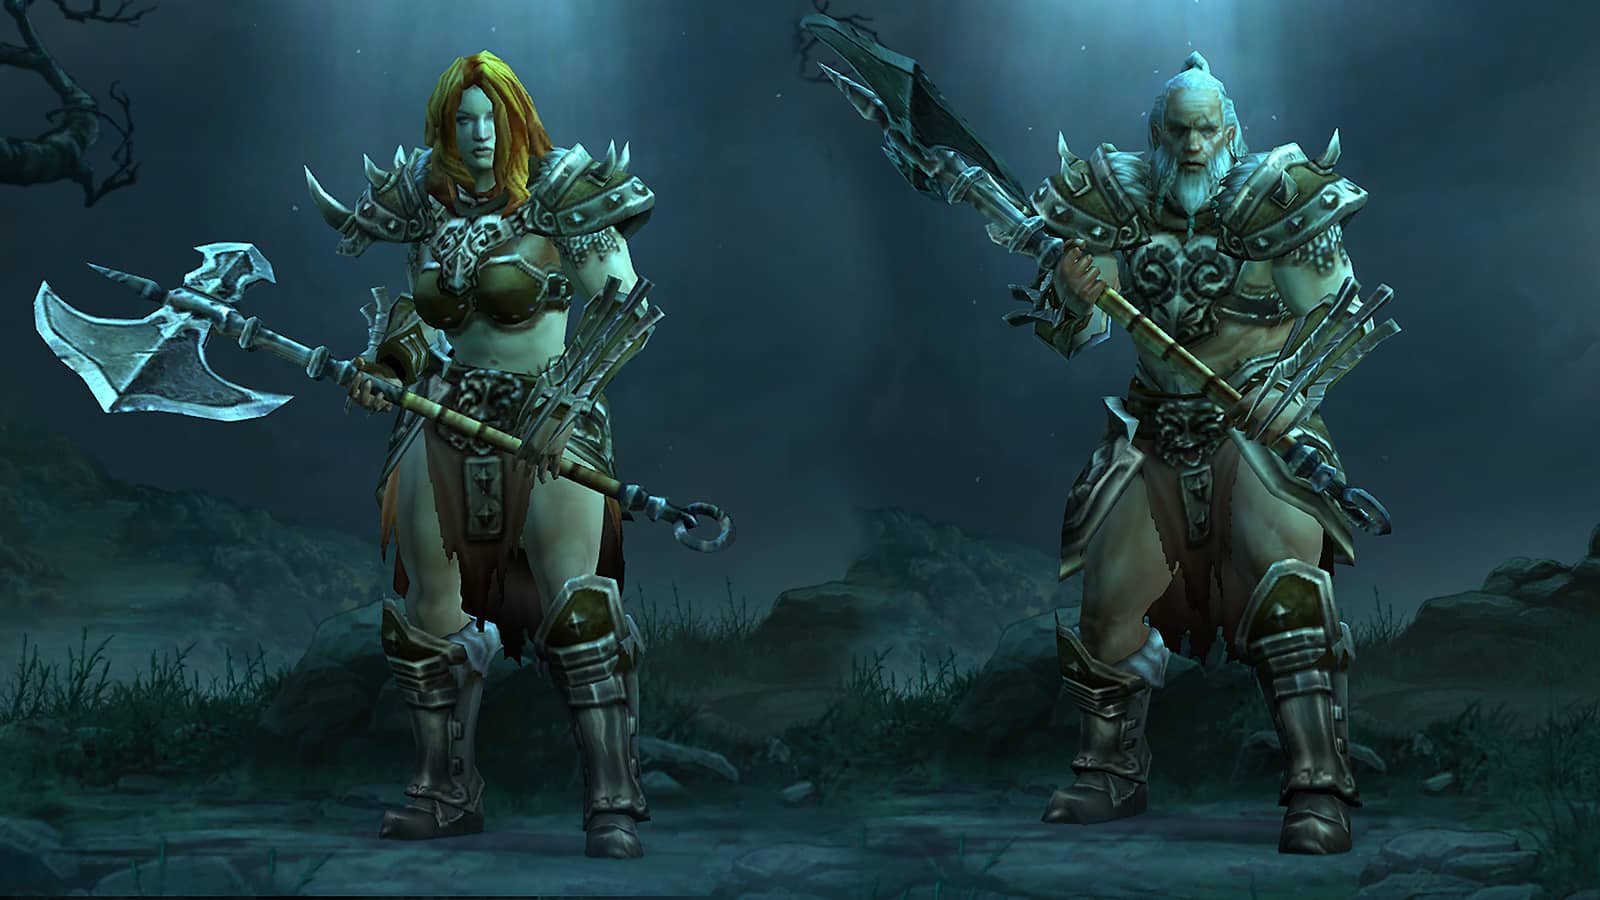 An image of Diablo 3's Barbarian class